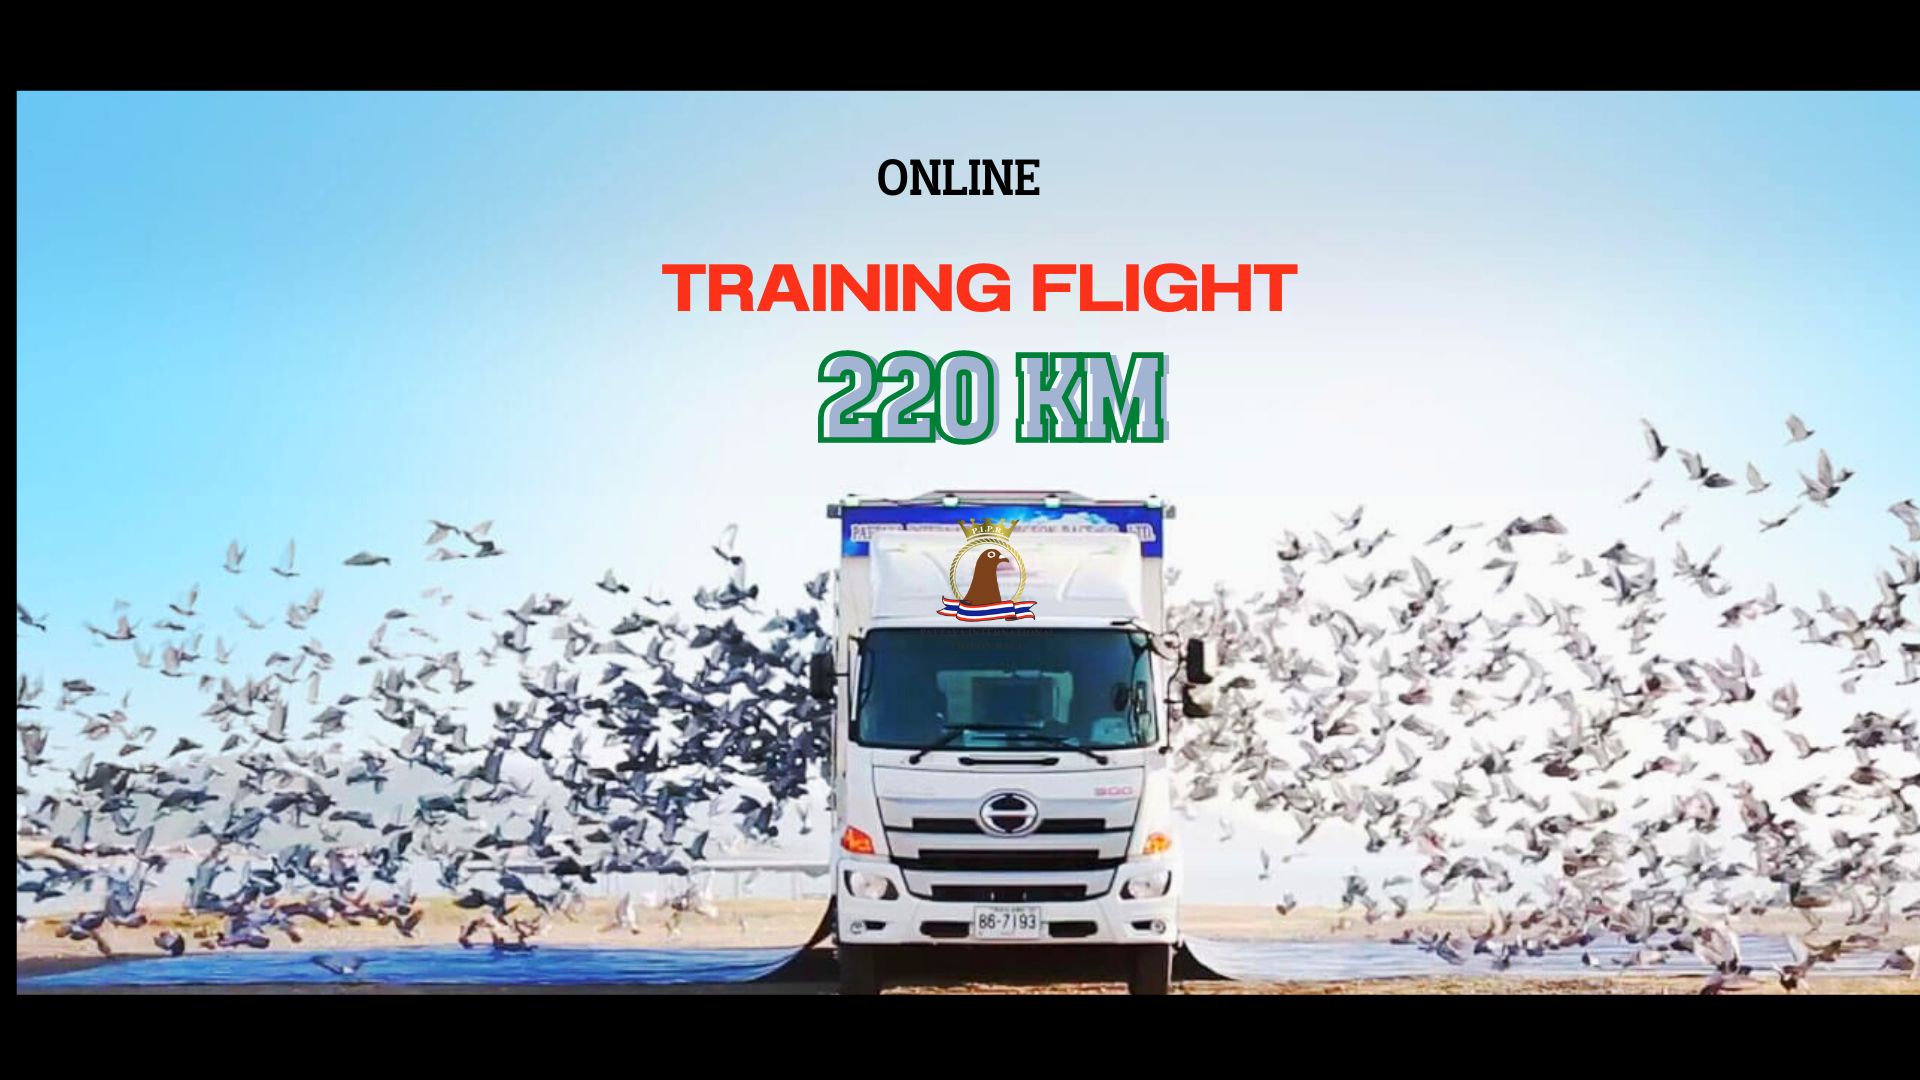 Training Flight 220km.